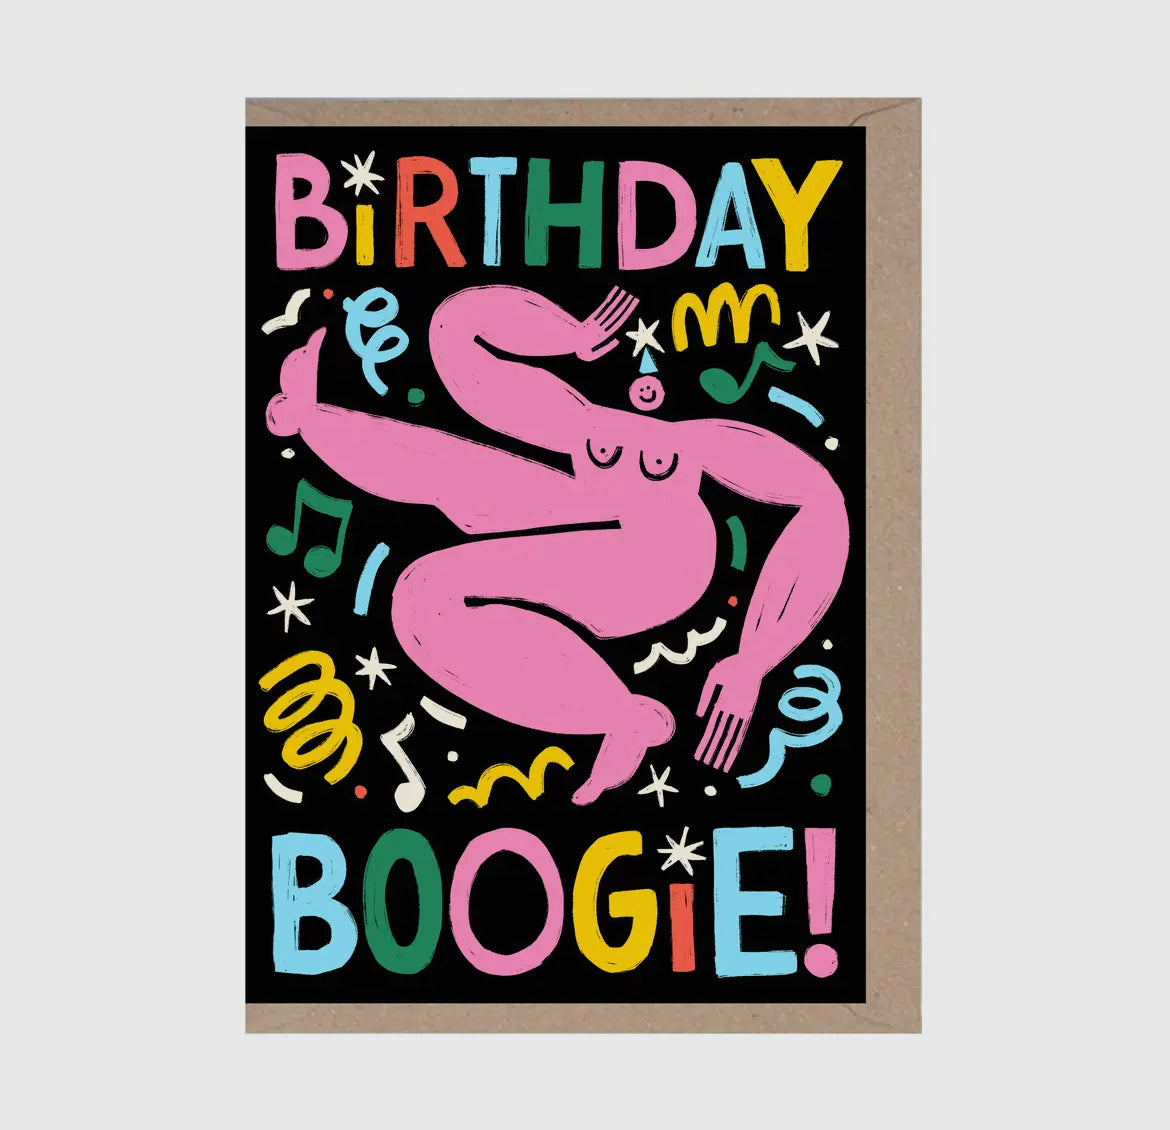 Birthday Boogie Card